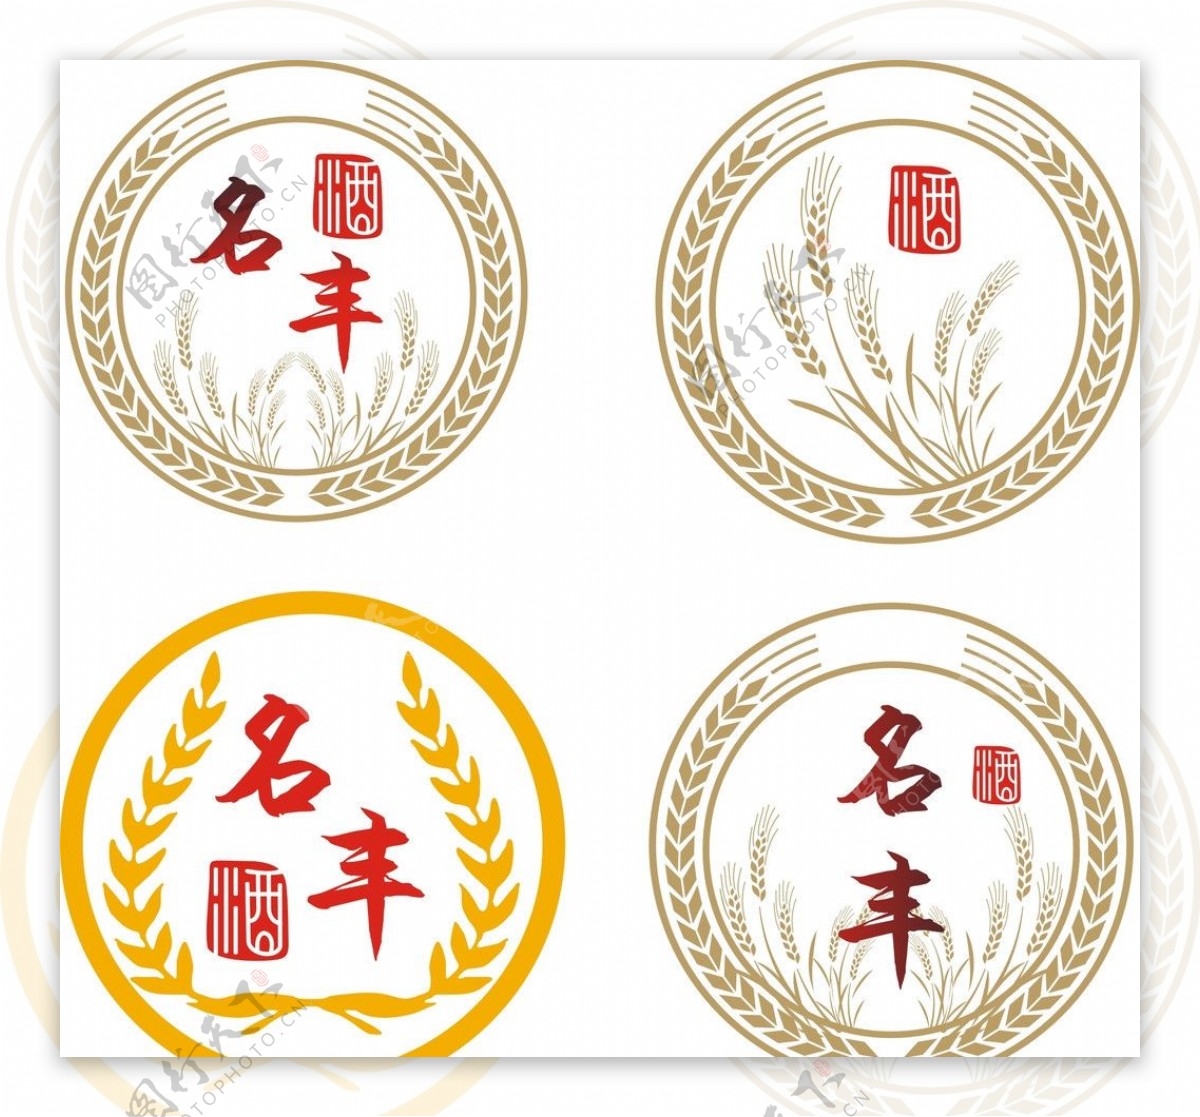 名丰酒logo图片